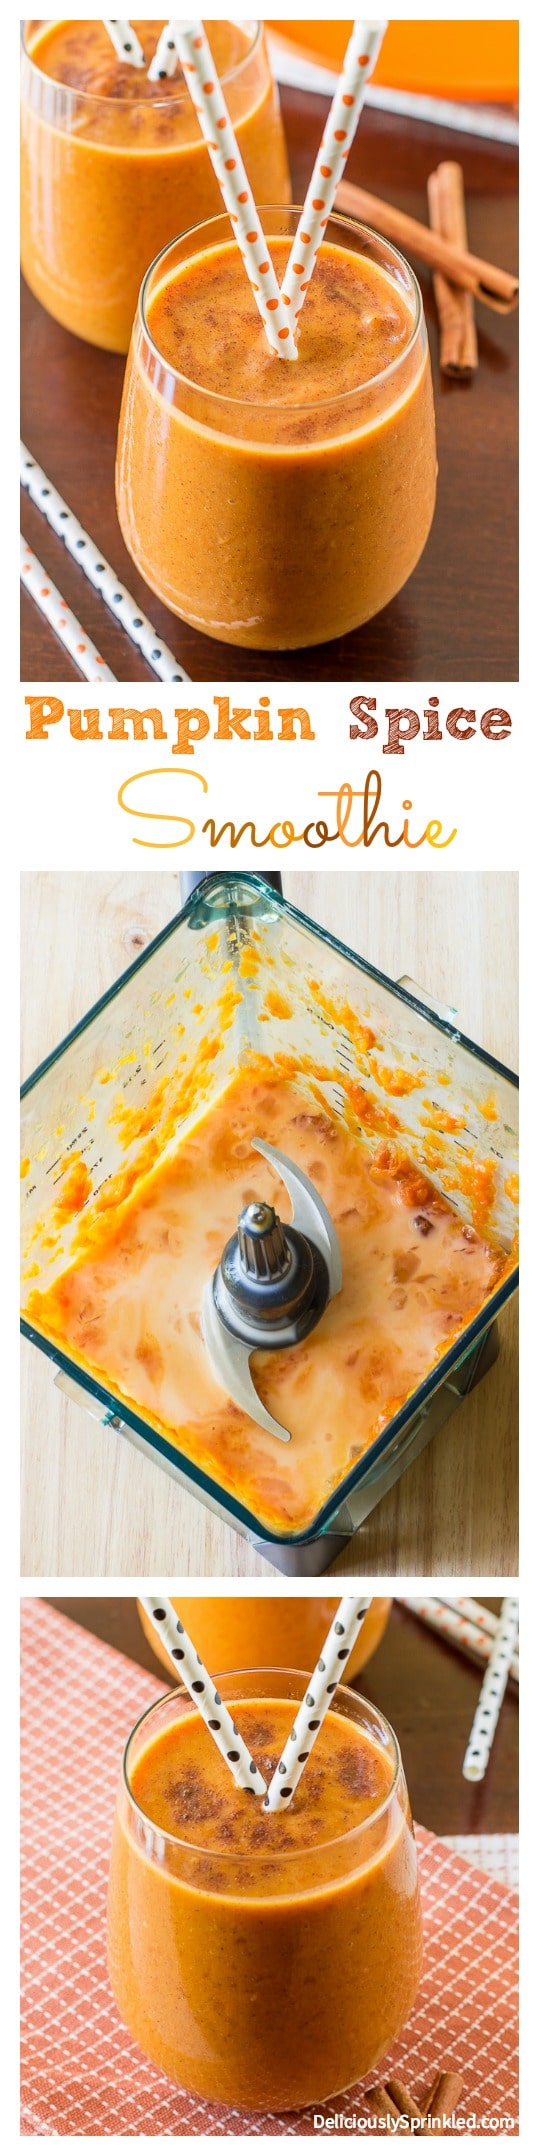 A delicious Pumpkin Spice Smoothie. Recipe by deliciouslysprinkled.com